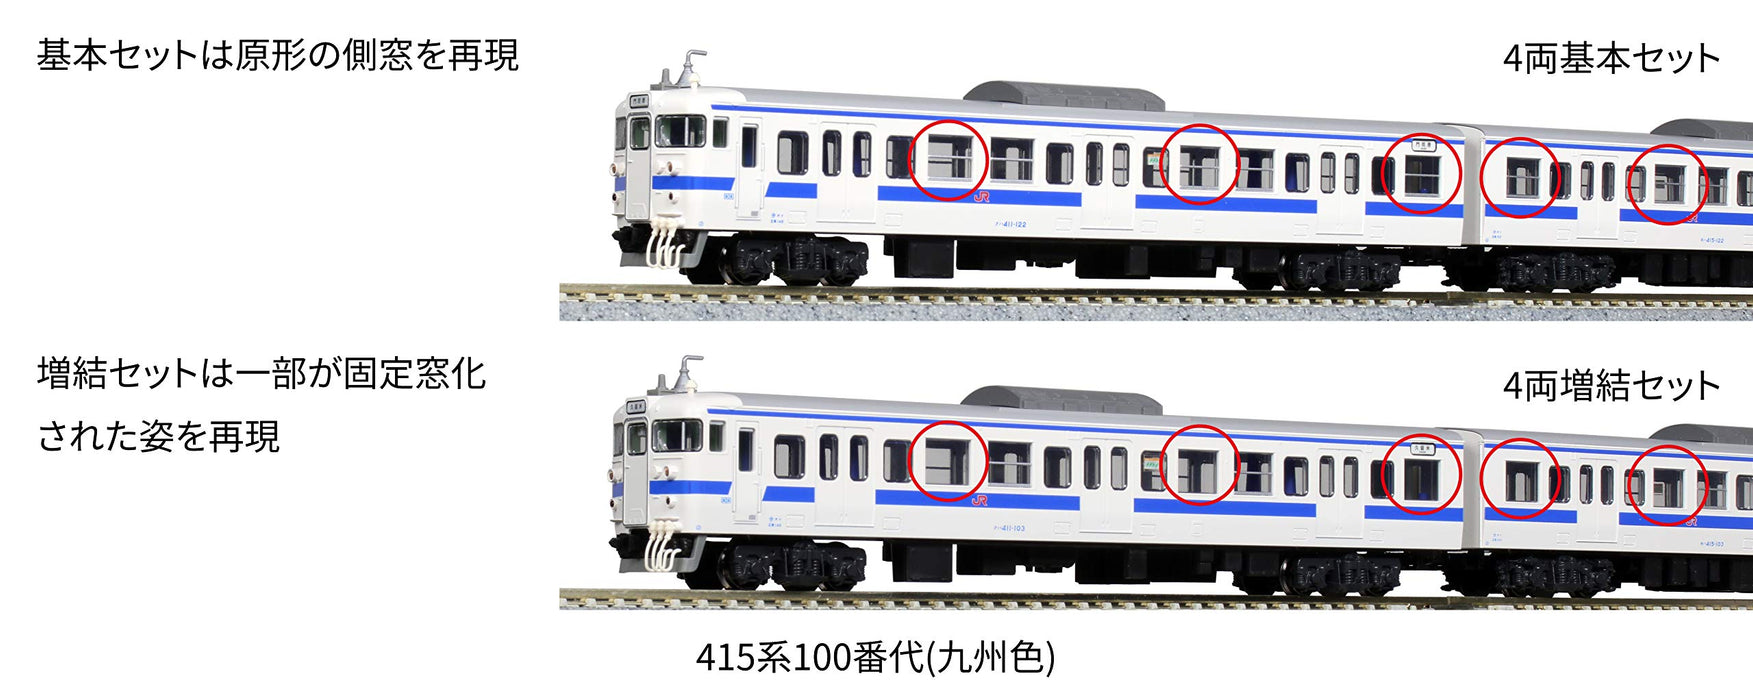 Kato N Gauge 415 Série 4-Car Railway Model Train Set Kyushu Couleur 10-1538